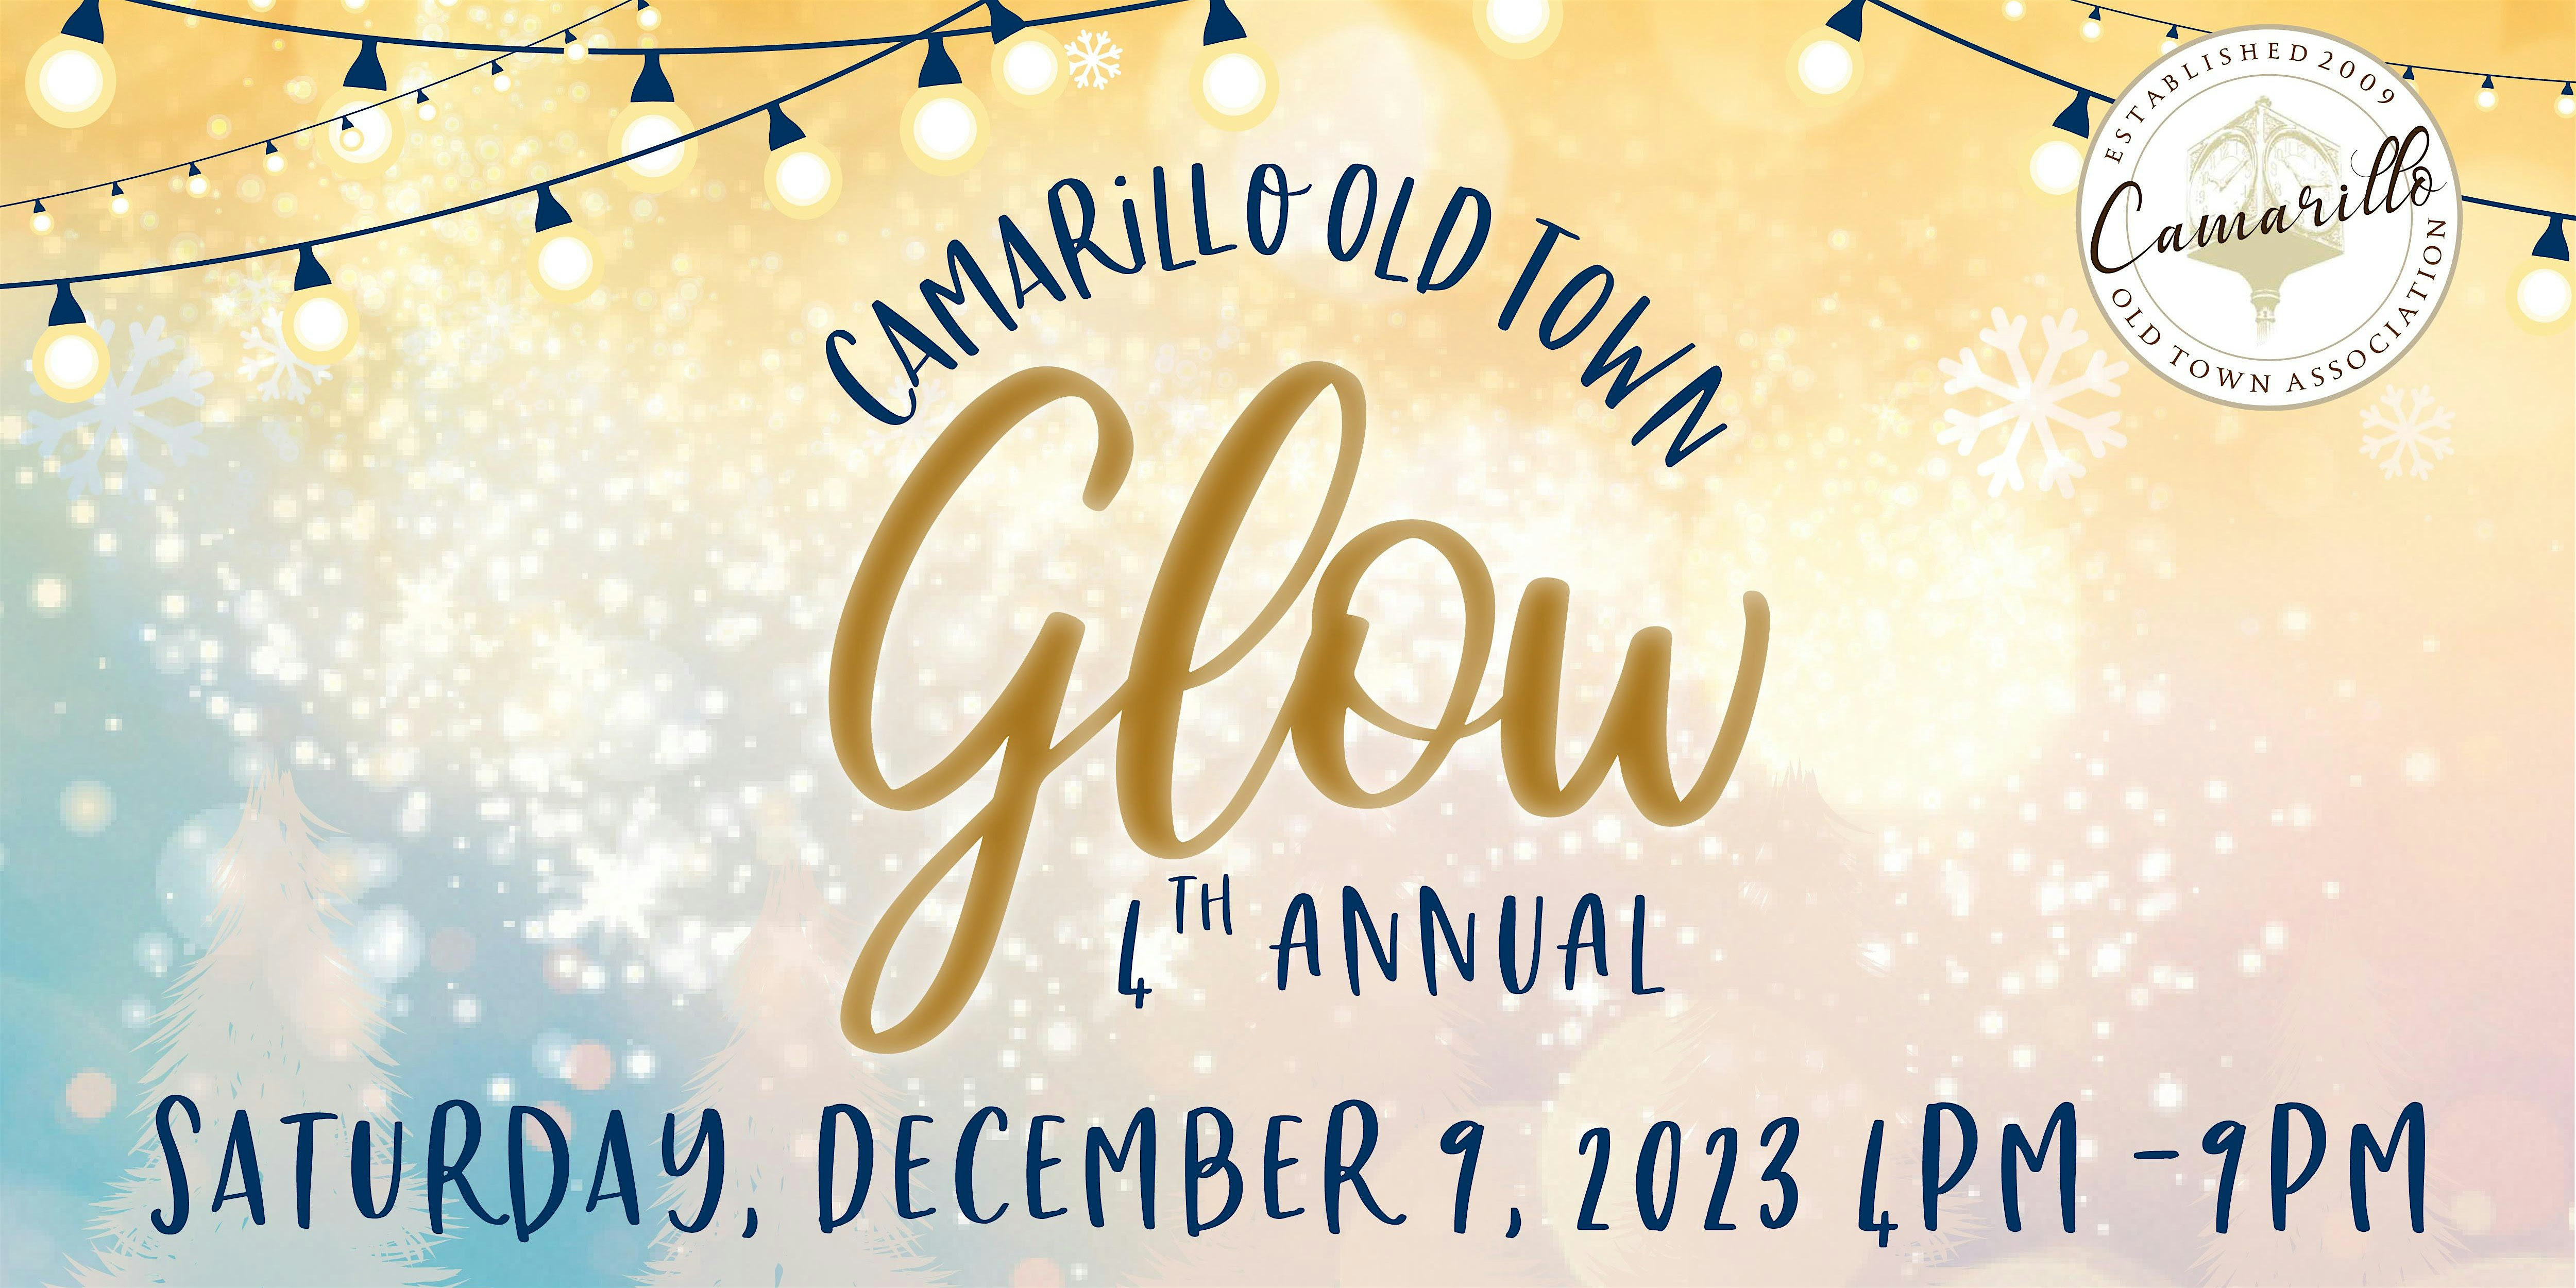 Camarillo Old Town Glow 4th Annual